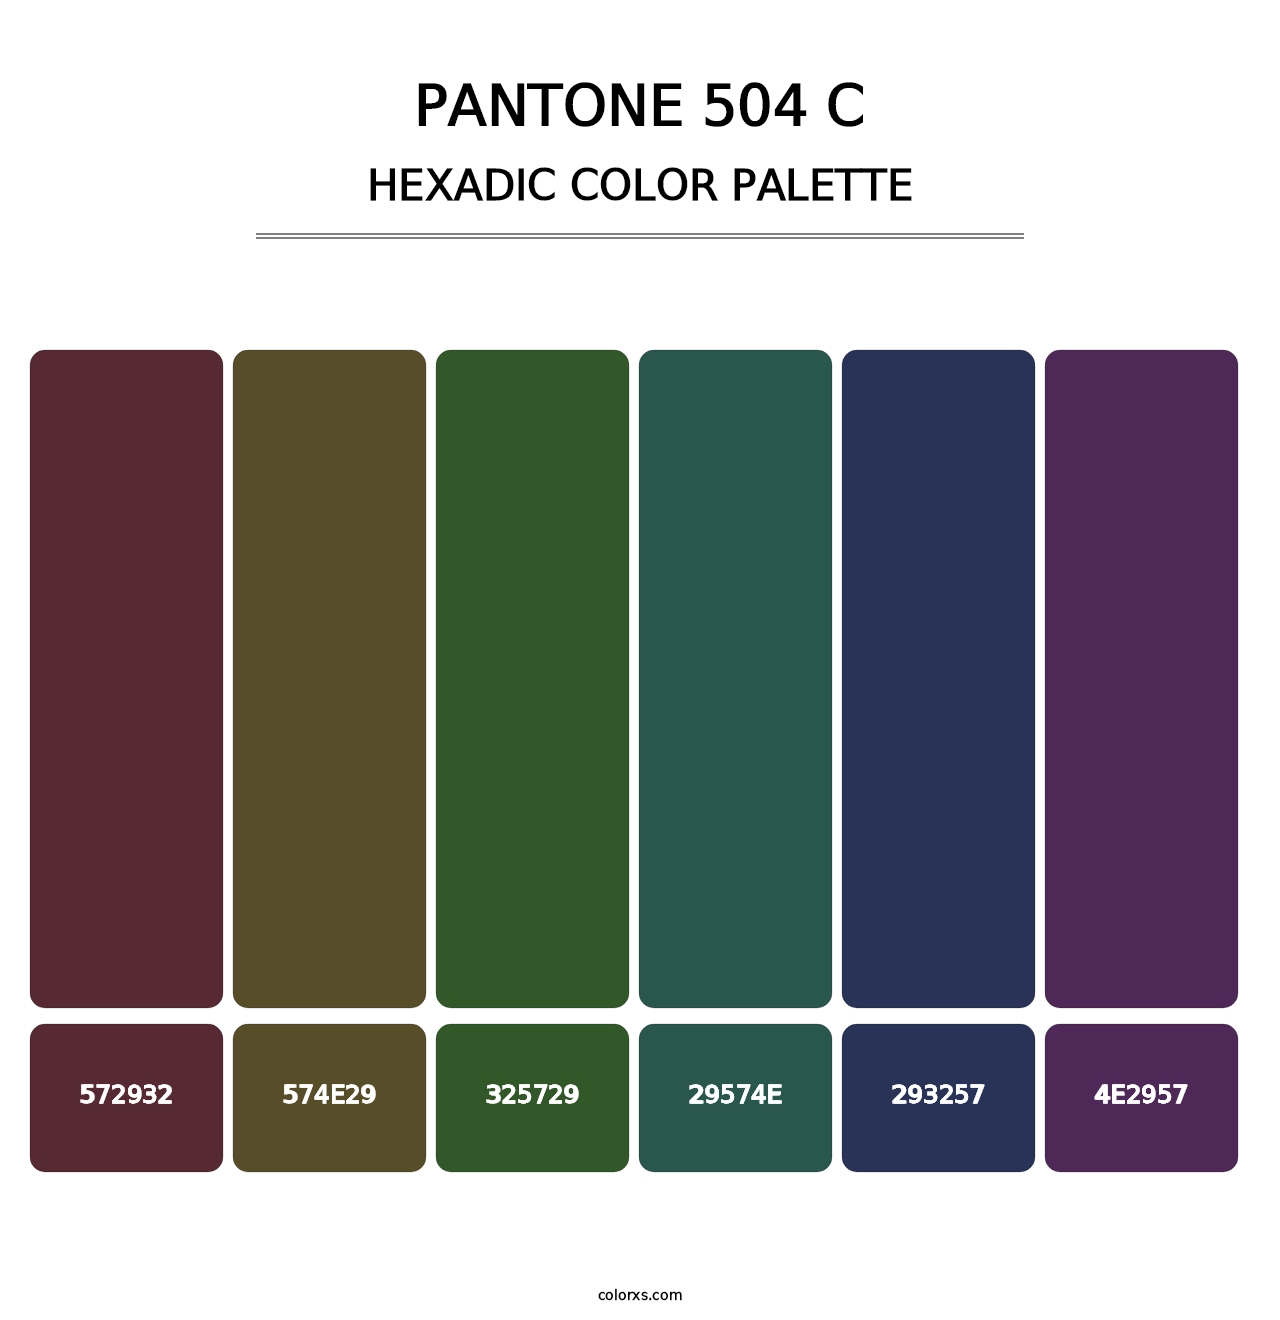 PANTONE 504 C - Hexadic Color Palette